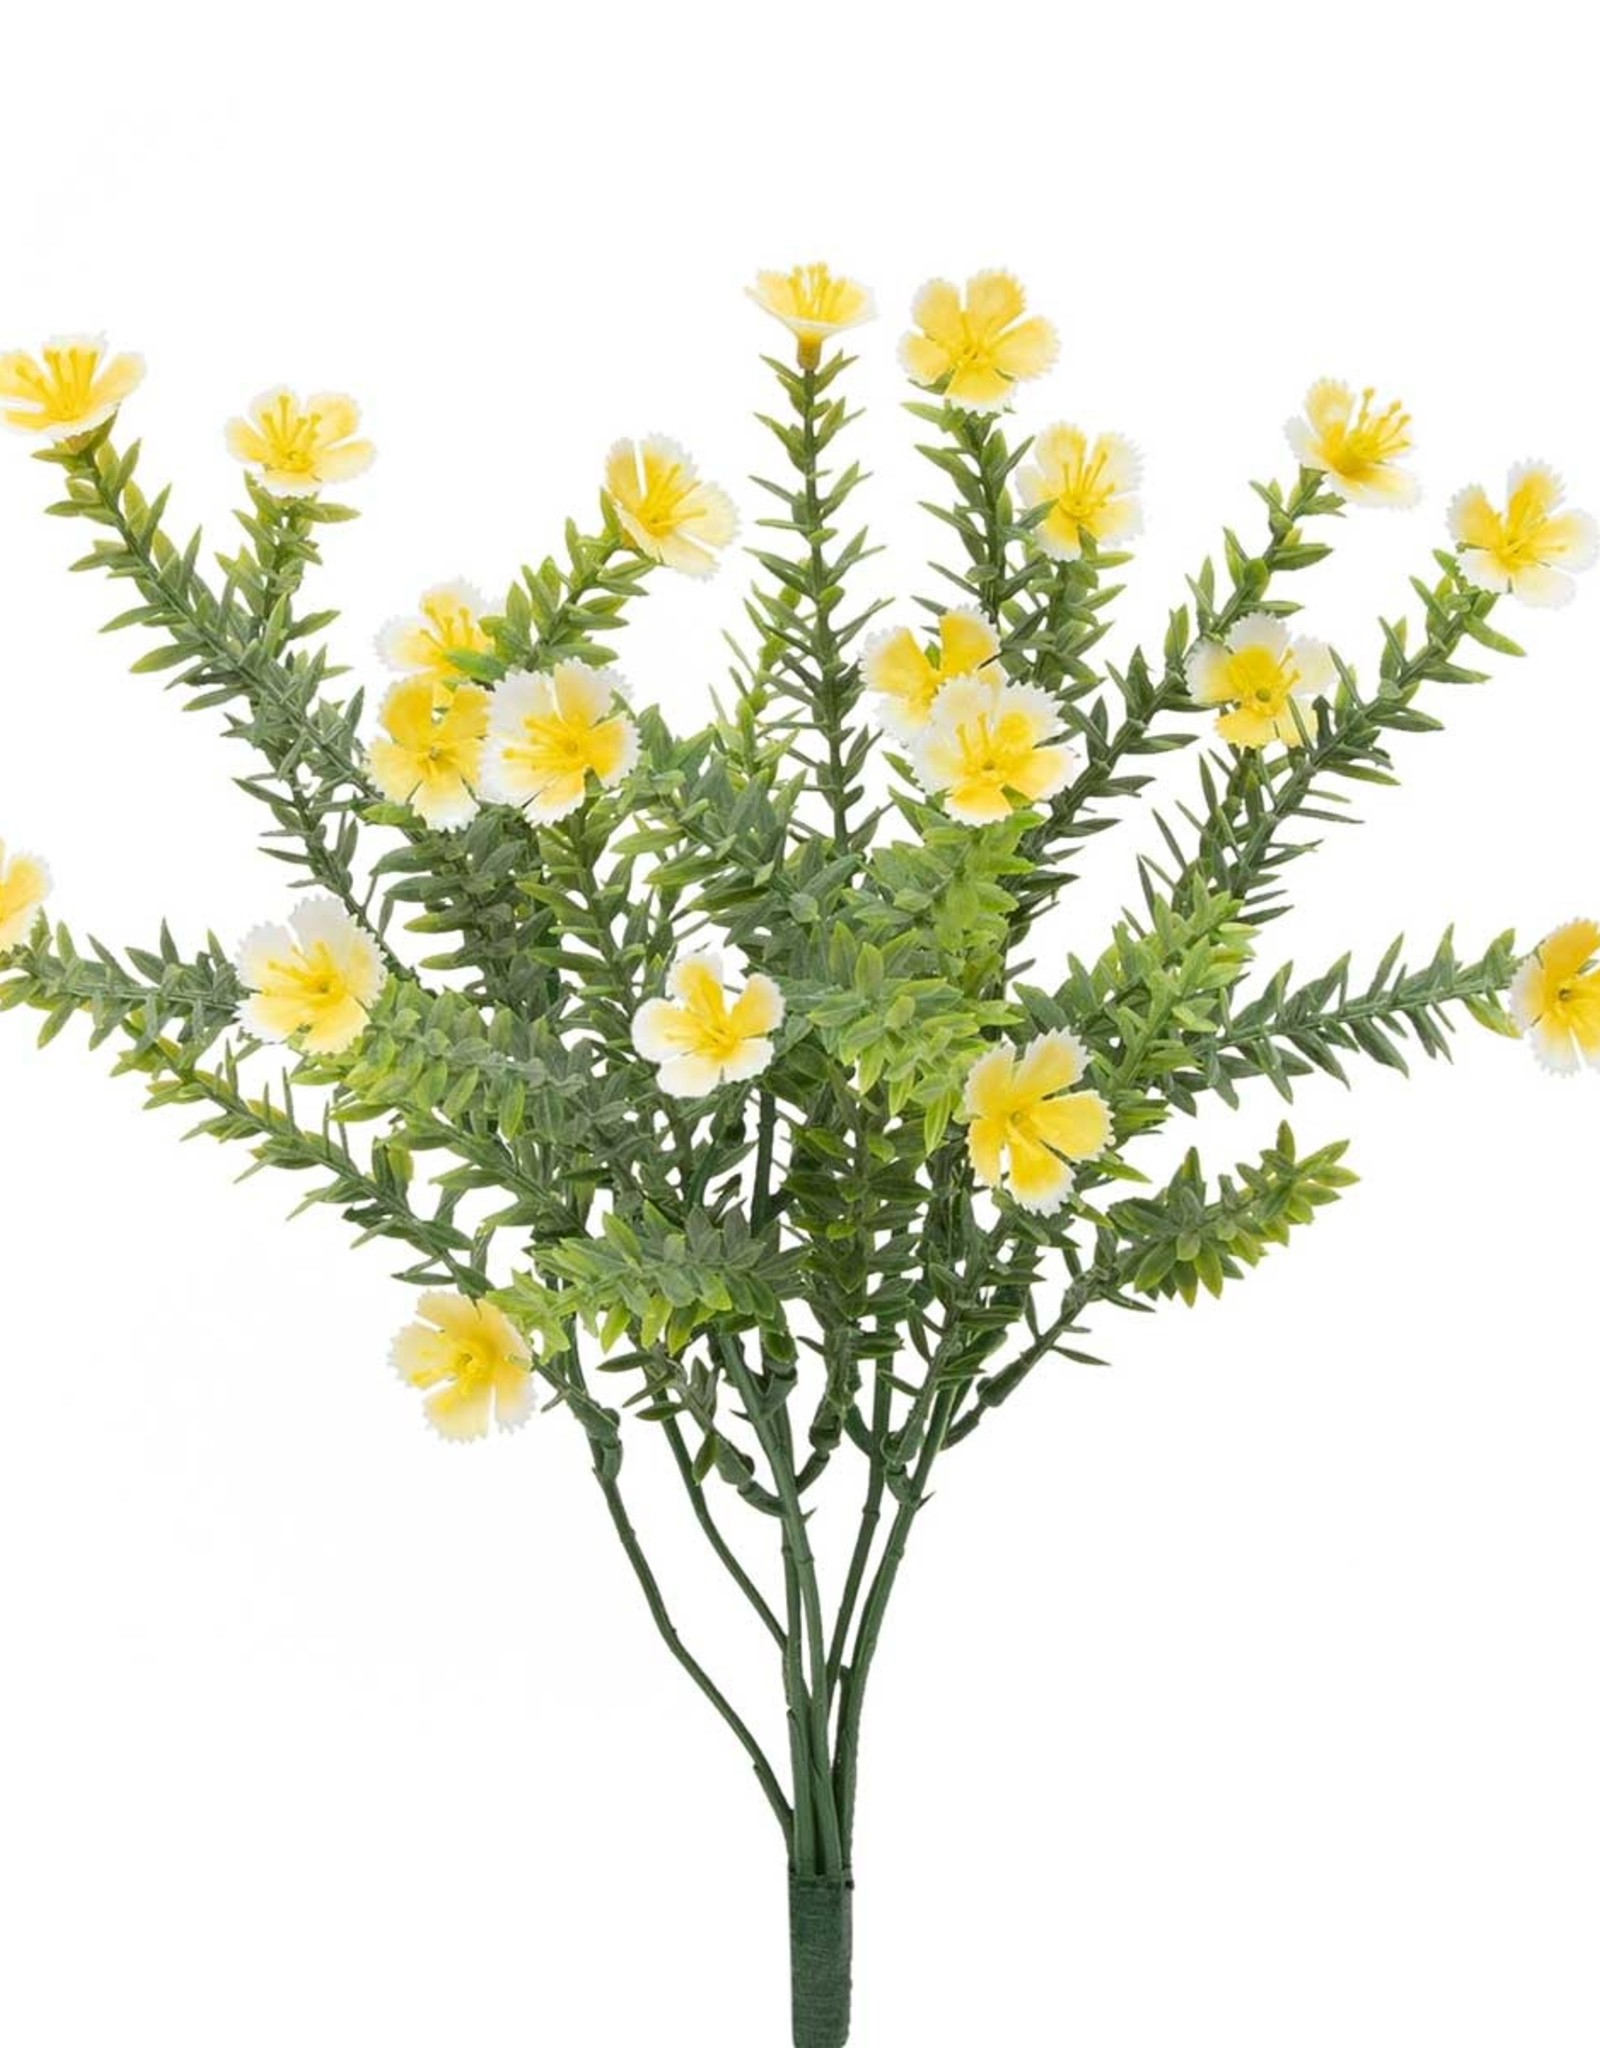 Meravic 14" Spike Grass Bush with Yellow Flower